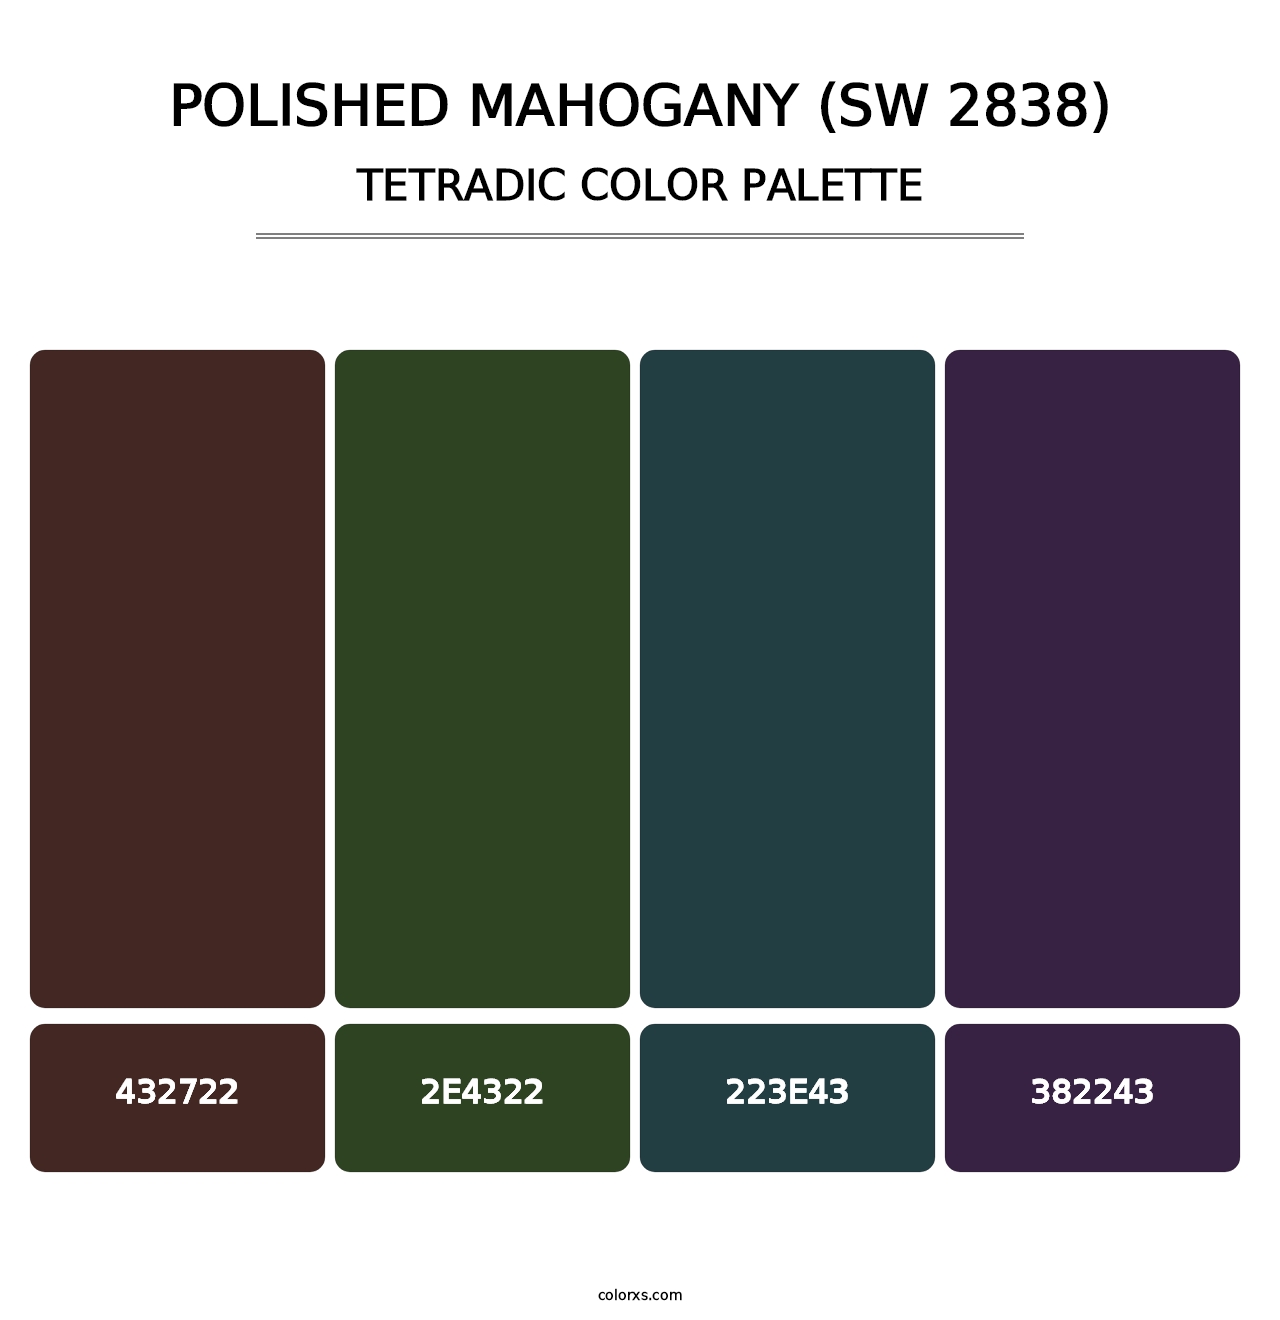 Polished Mahogany (SW 2838) - Tetradic Color Palette